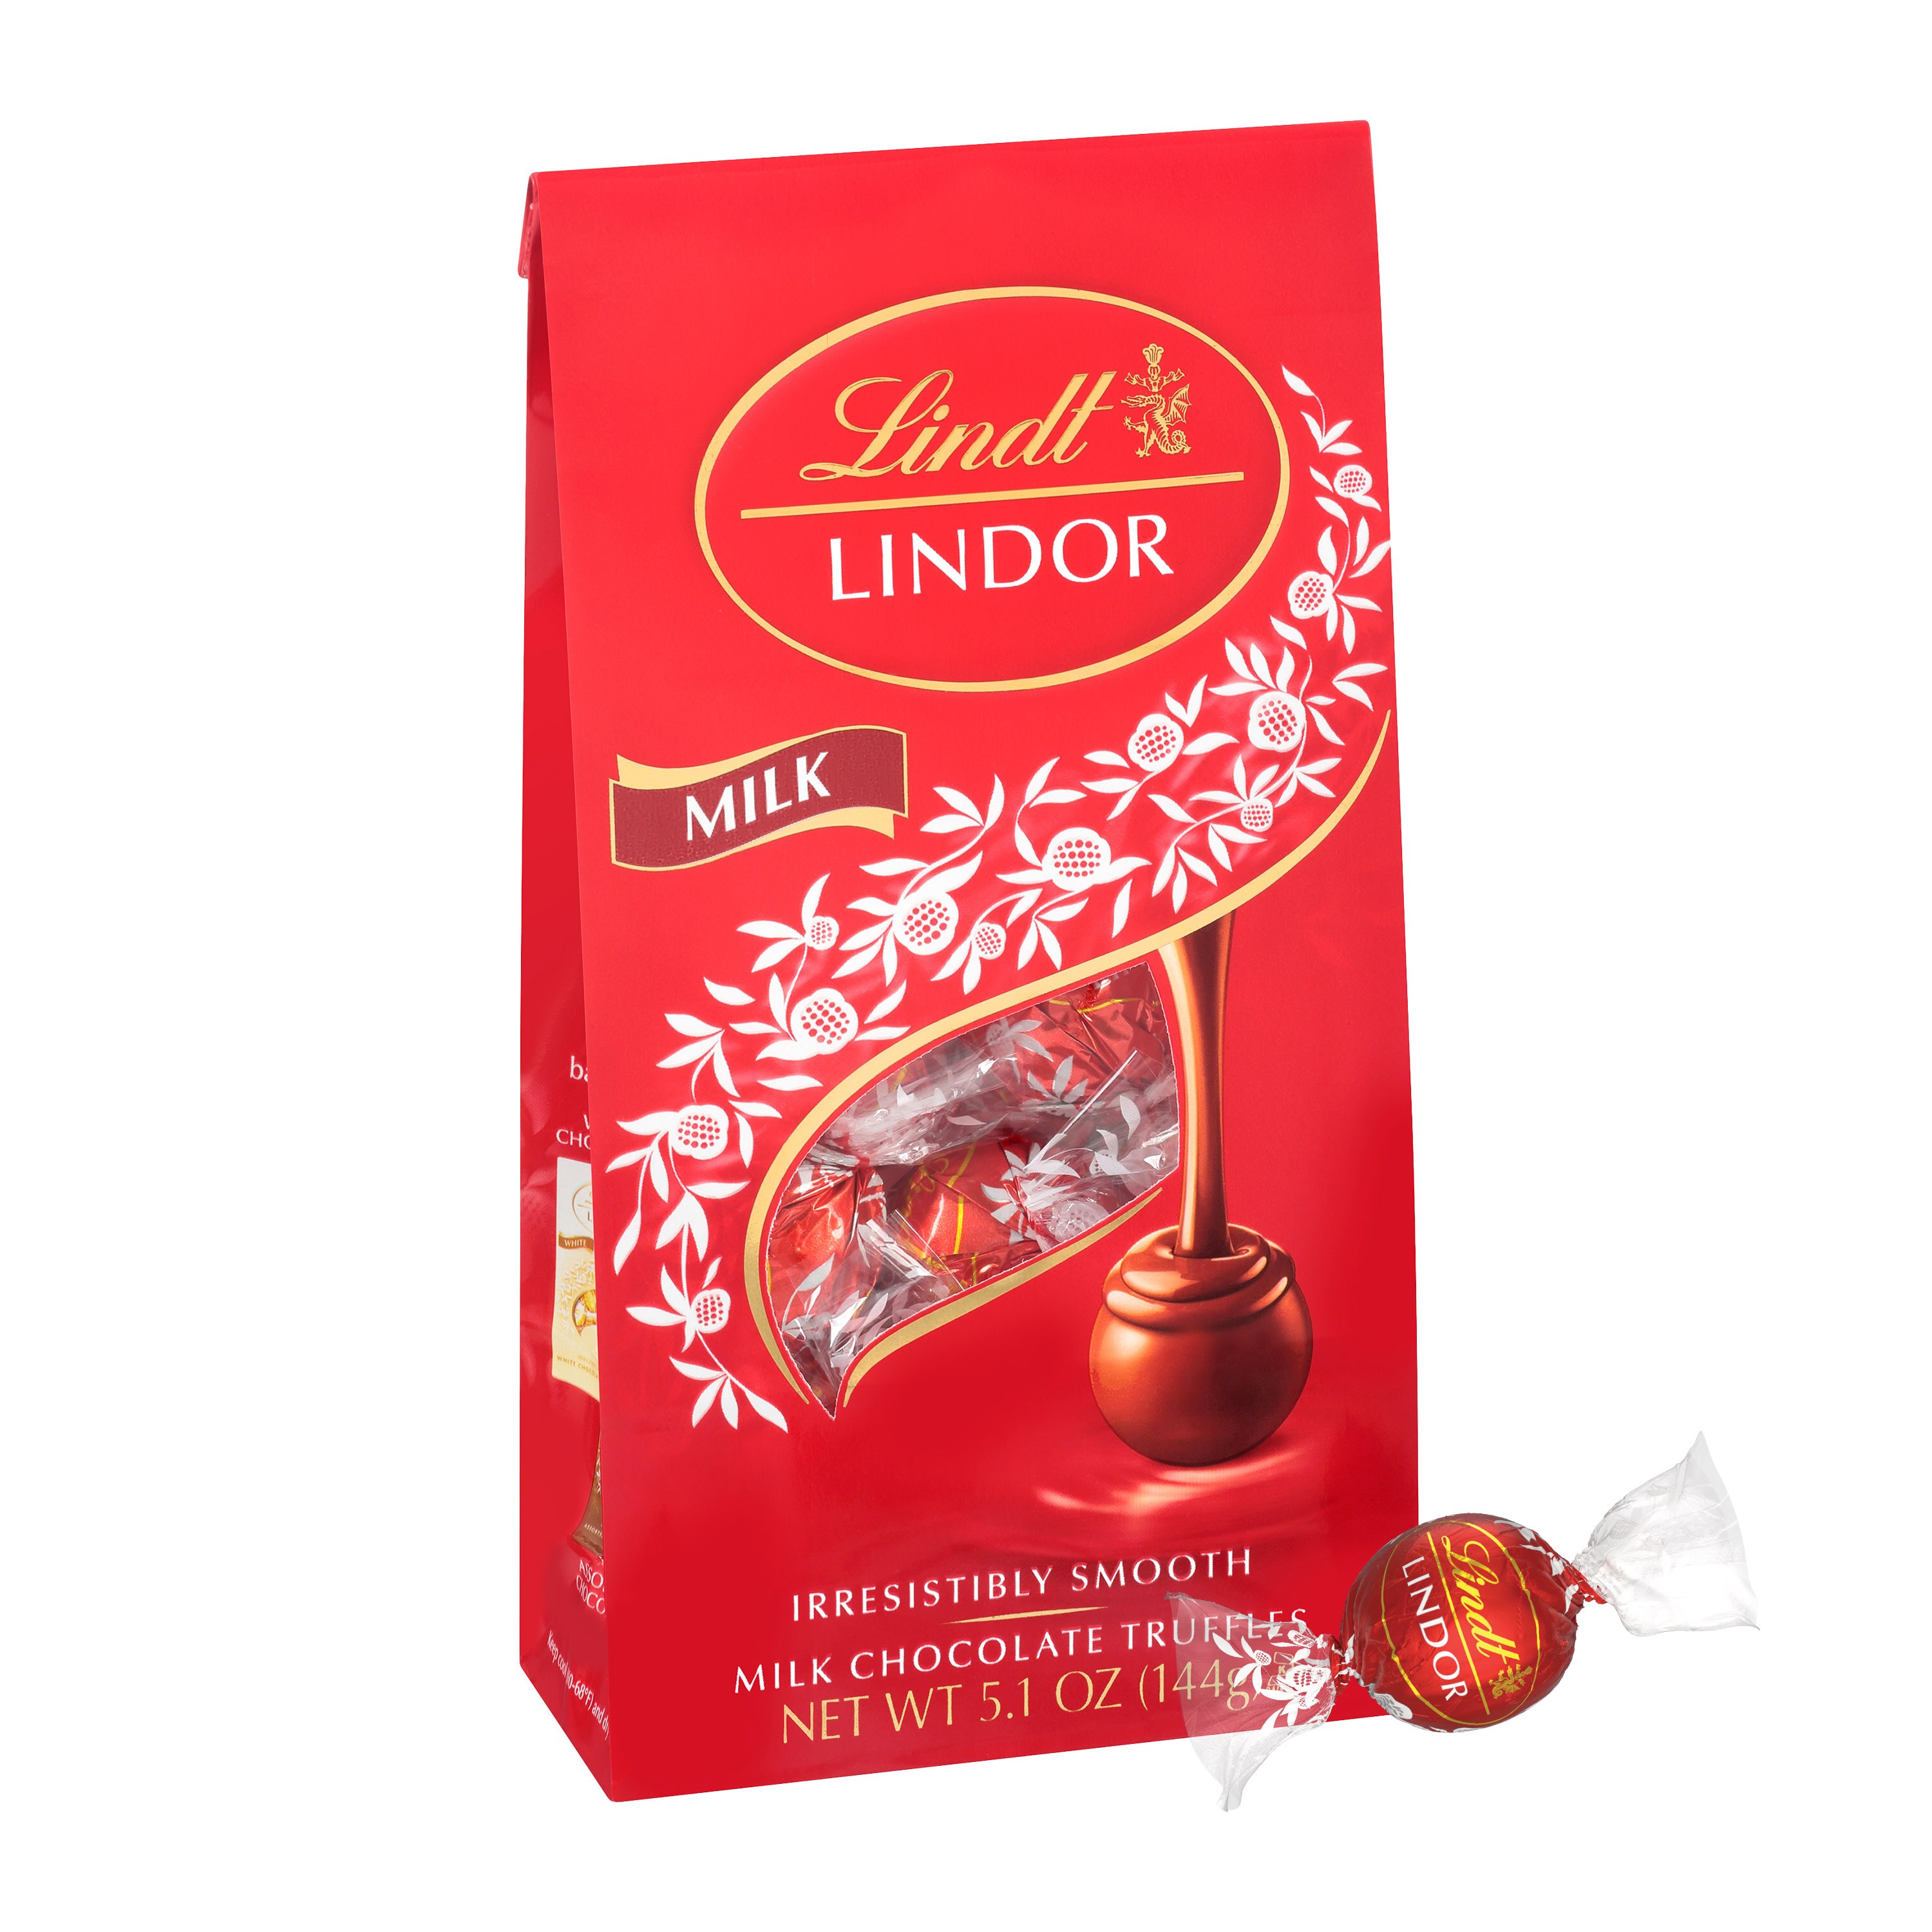  Lindt LINDOR Milk Chocolate Truffles, 5.1 OZ 